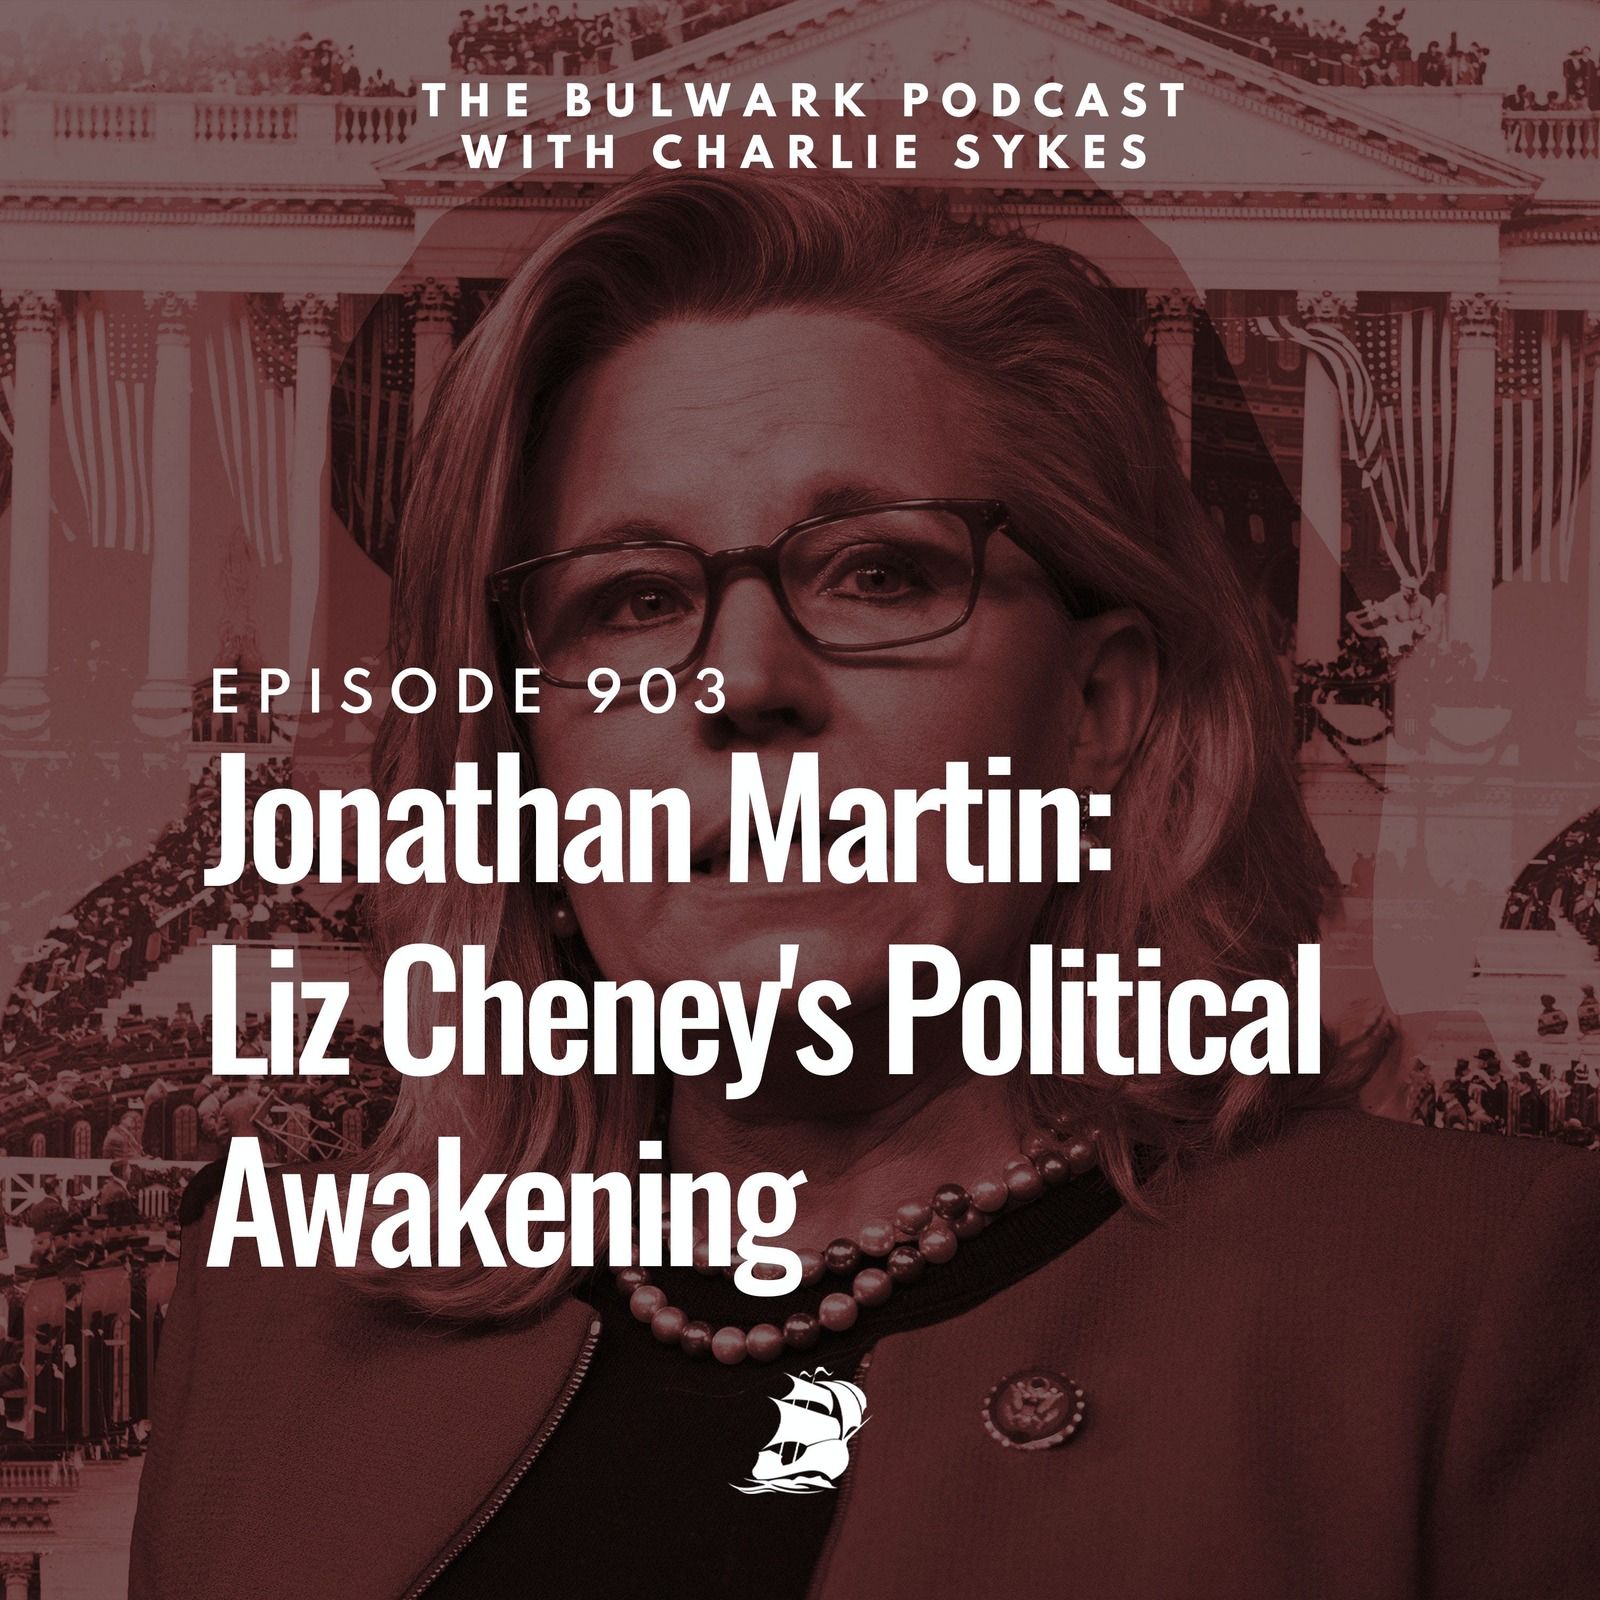 Jonathan Martin: Liz Cheney's Political Awakening by The Bulwark Podcast